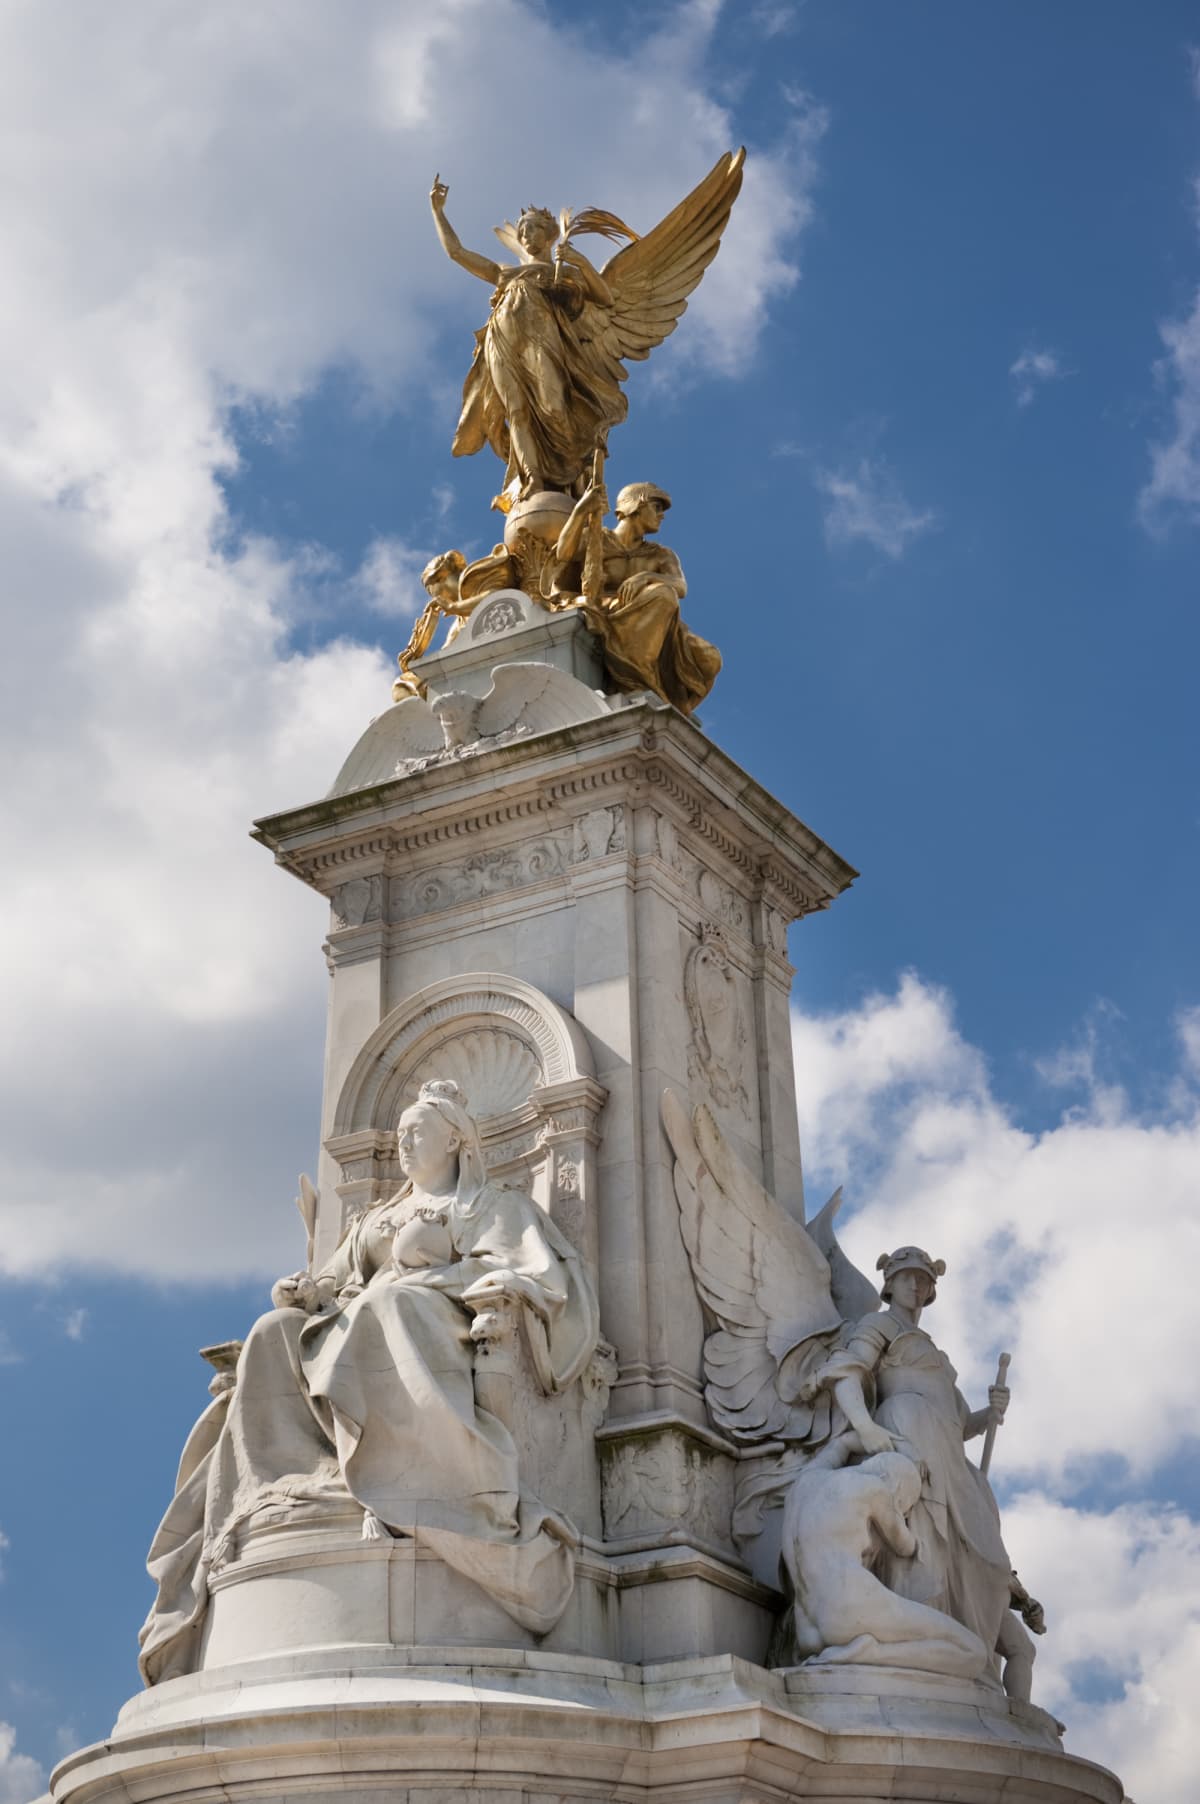 Statue at Buckingham Palace gates in London, United Kingdom